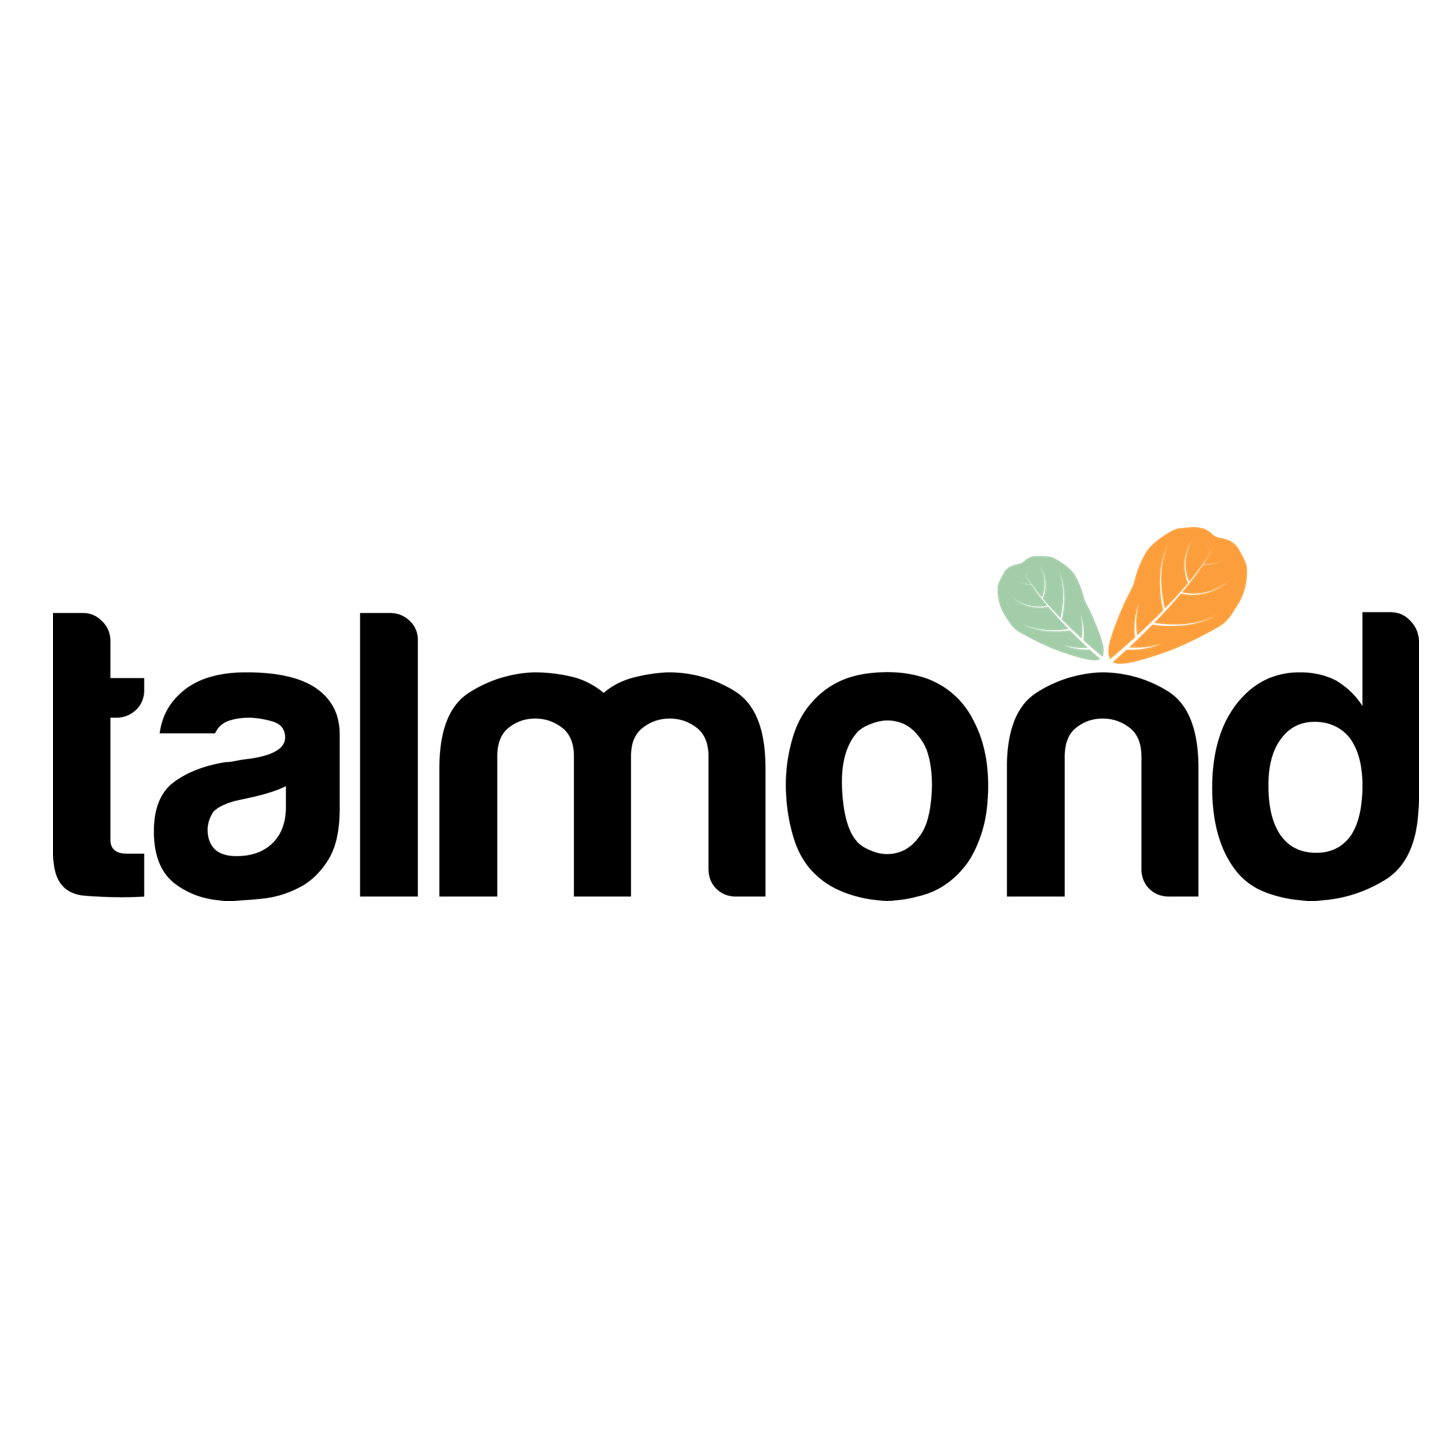 Talmond Foods